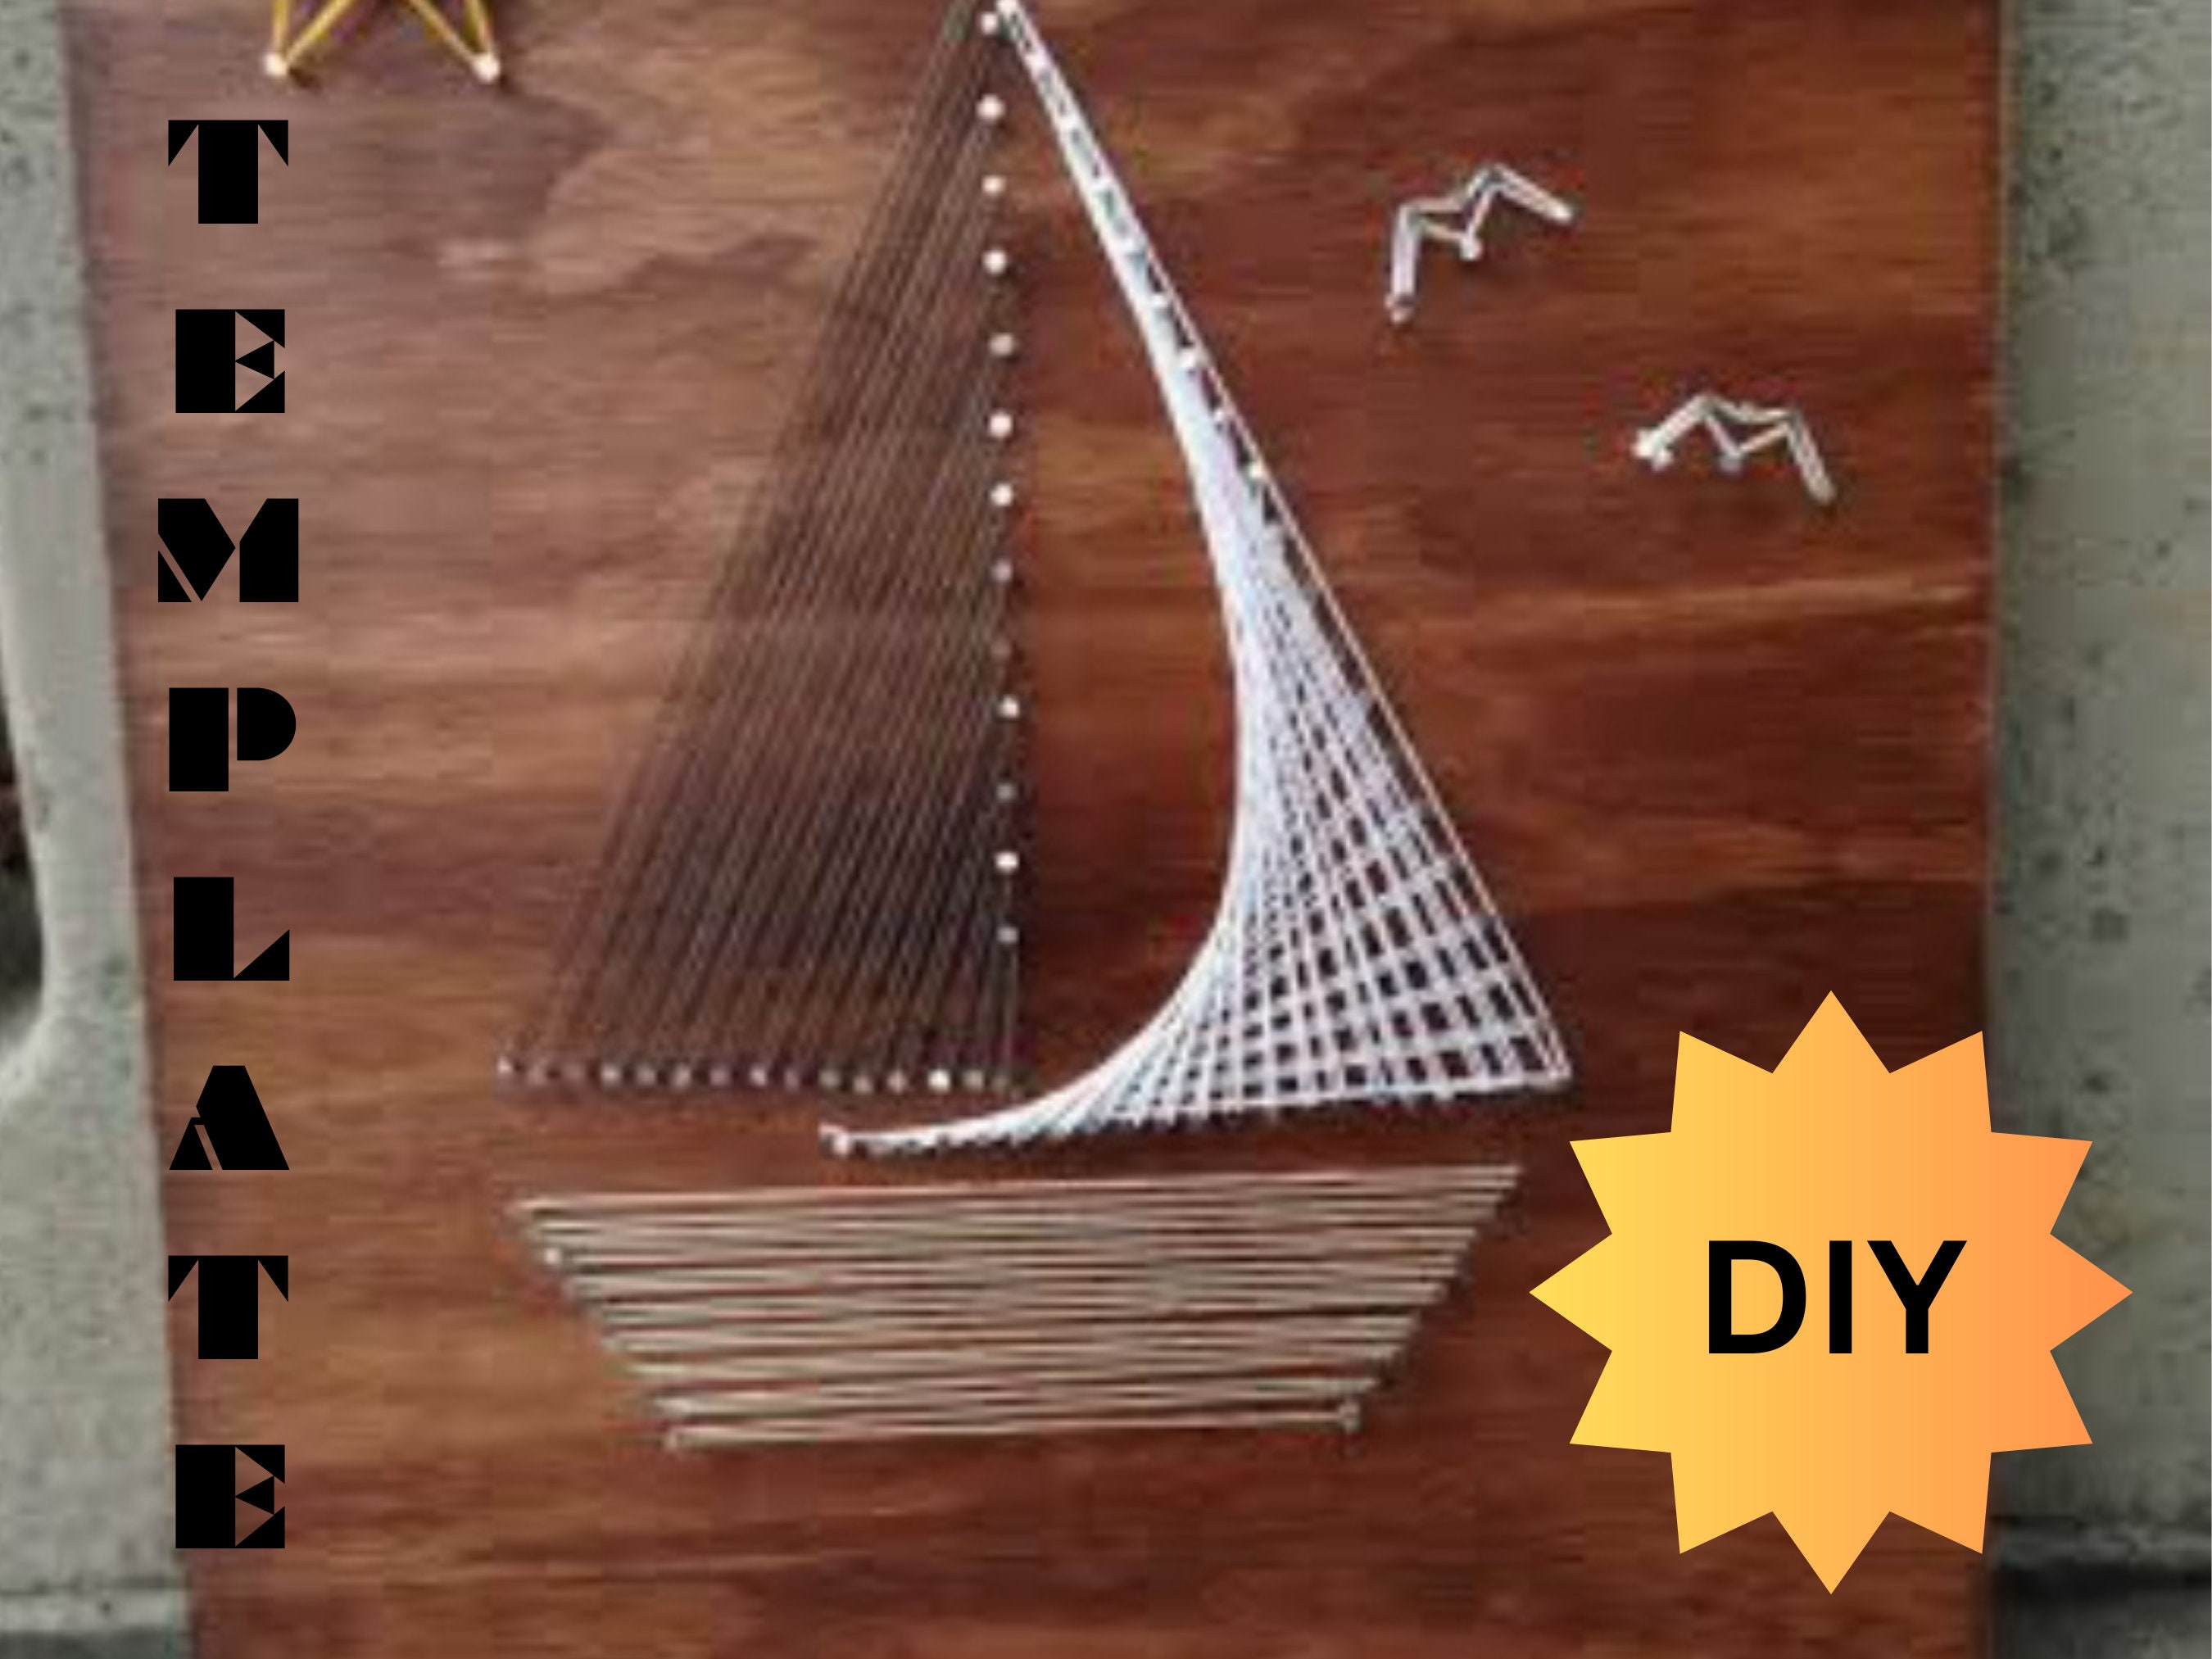 DIY String Art Nautical Sailboat Wall Art Kit, Make Your Own 12x12 Nautical  Home Decor, Beach House Decor, Adult Art Kit Christmas Gift 